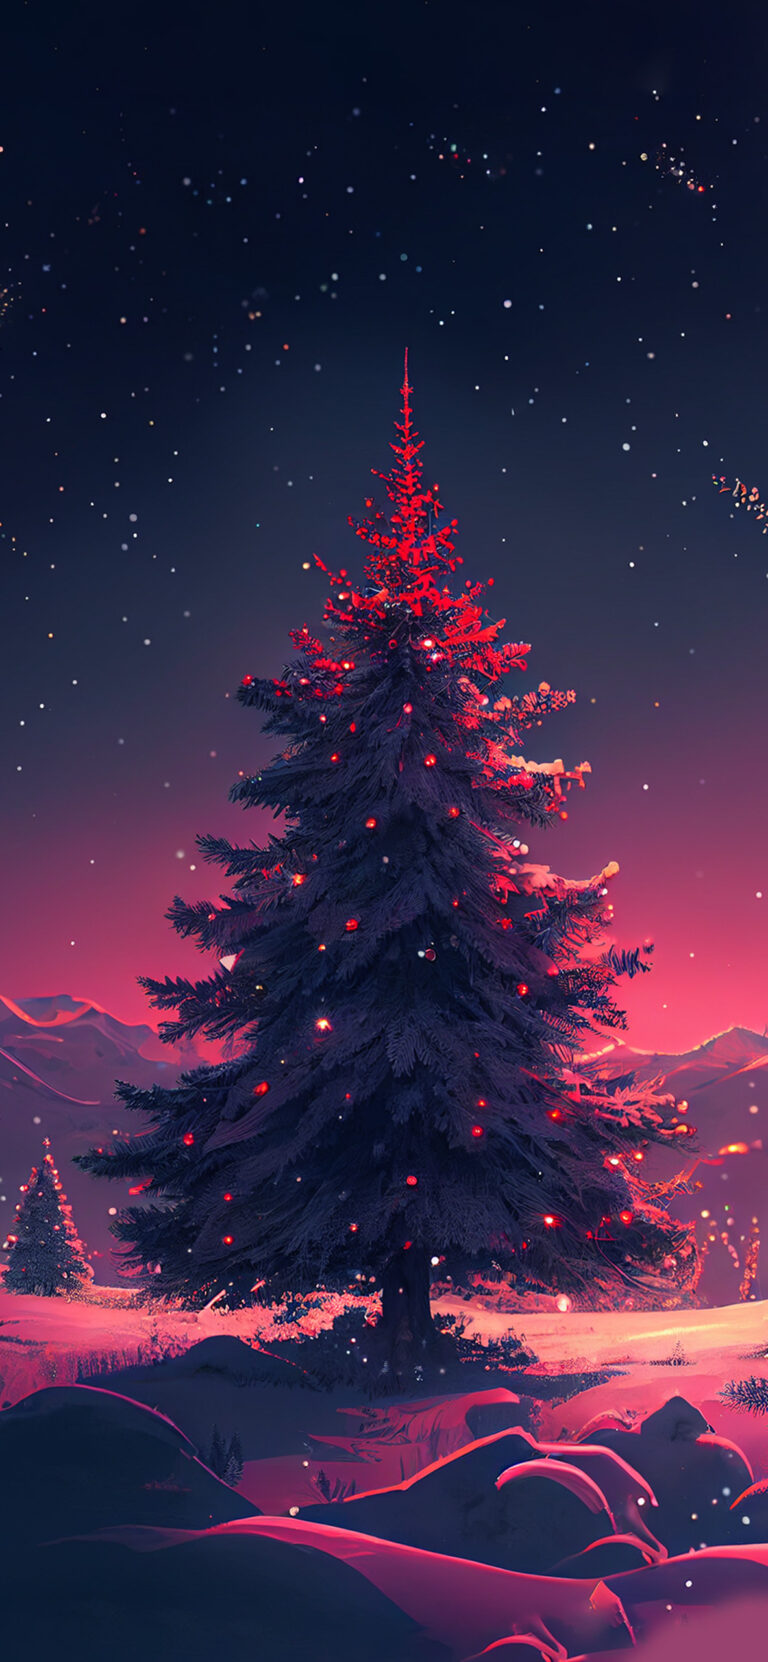 Aesthetic Christmas Tree Wallpaper - Christmas Wallpapers iPhone